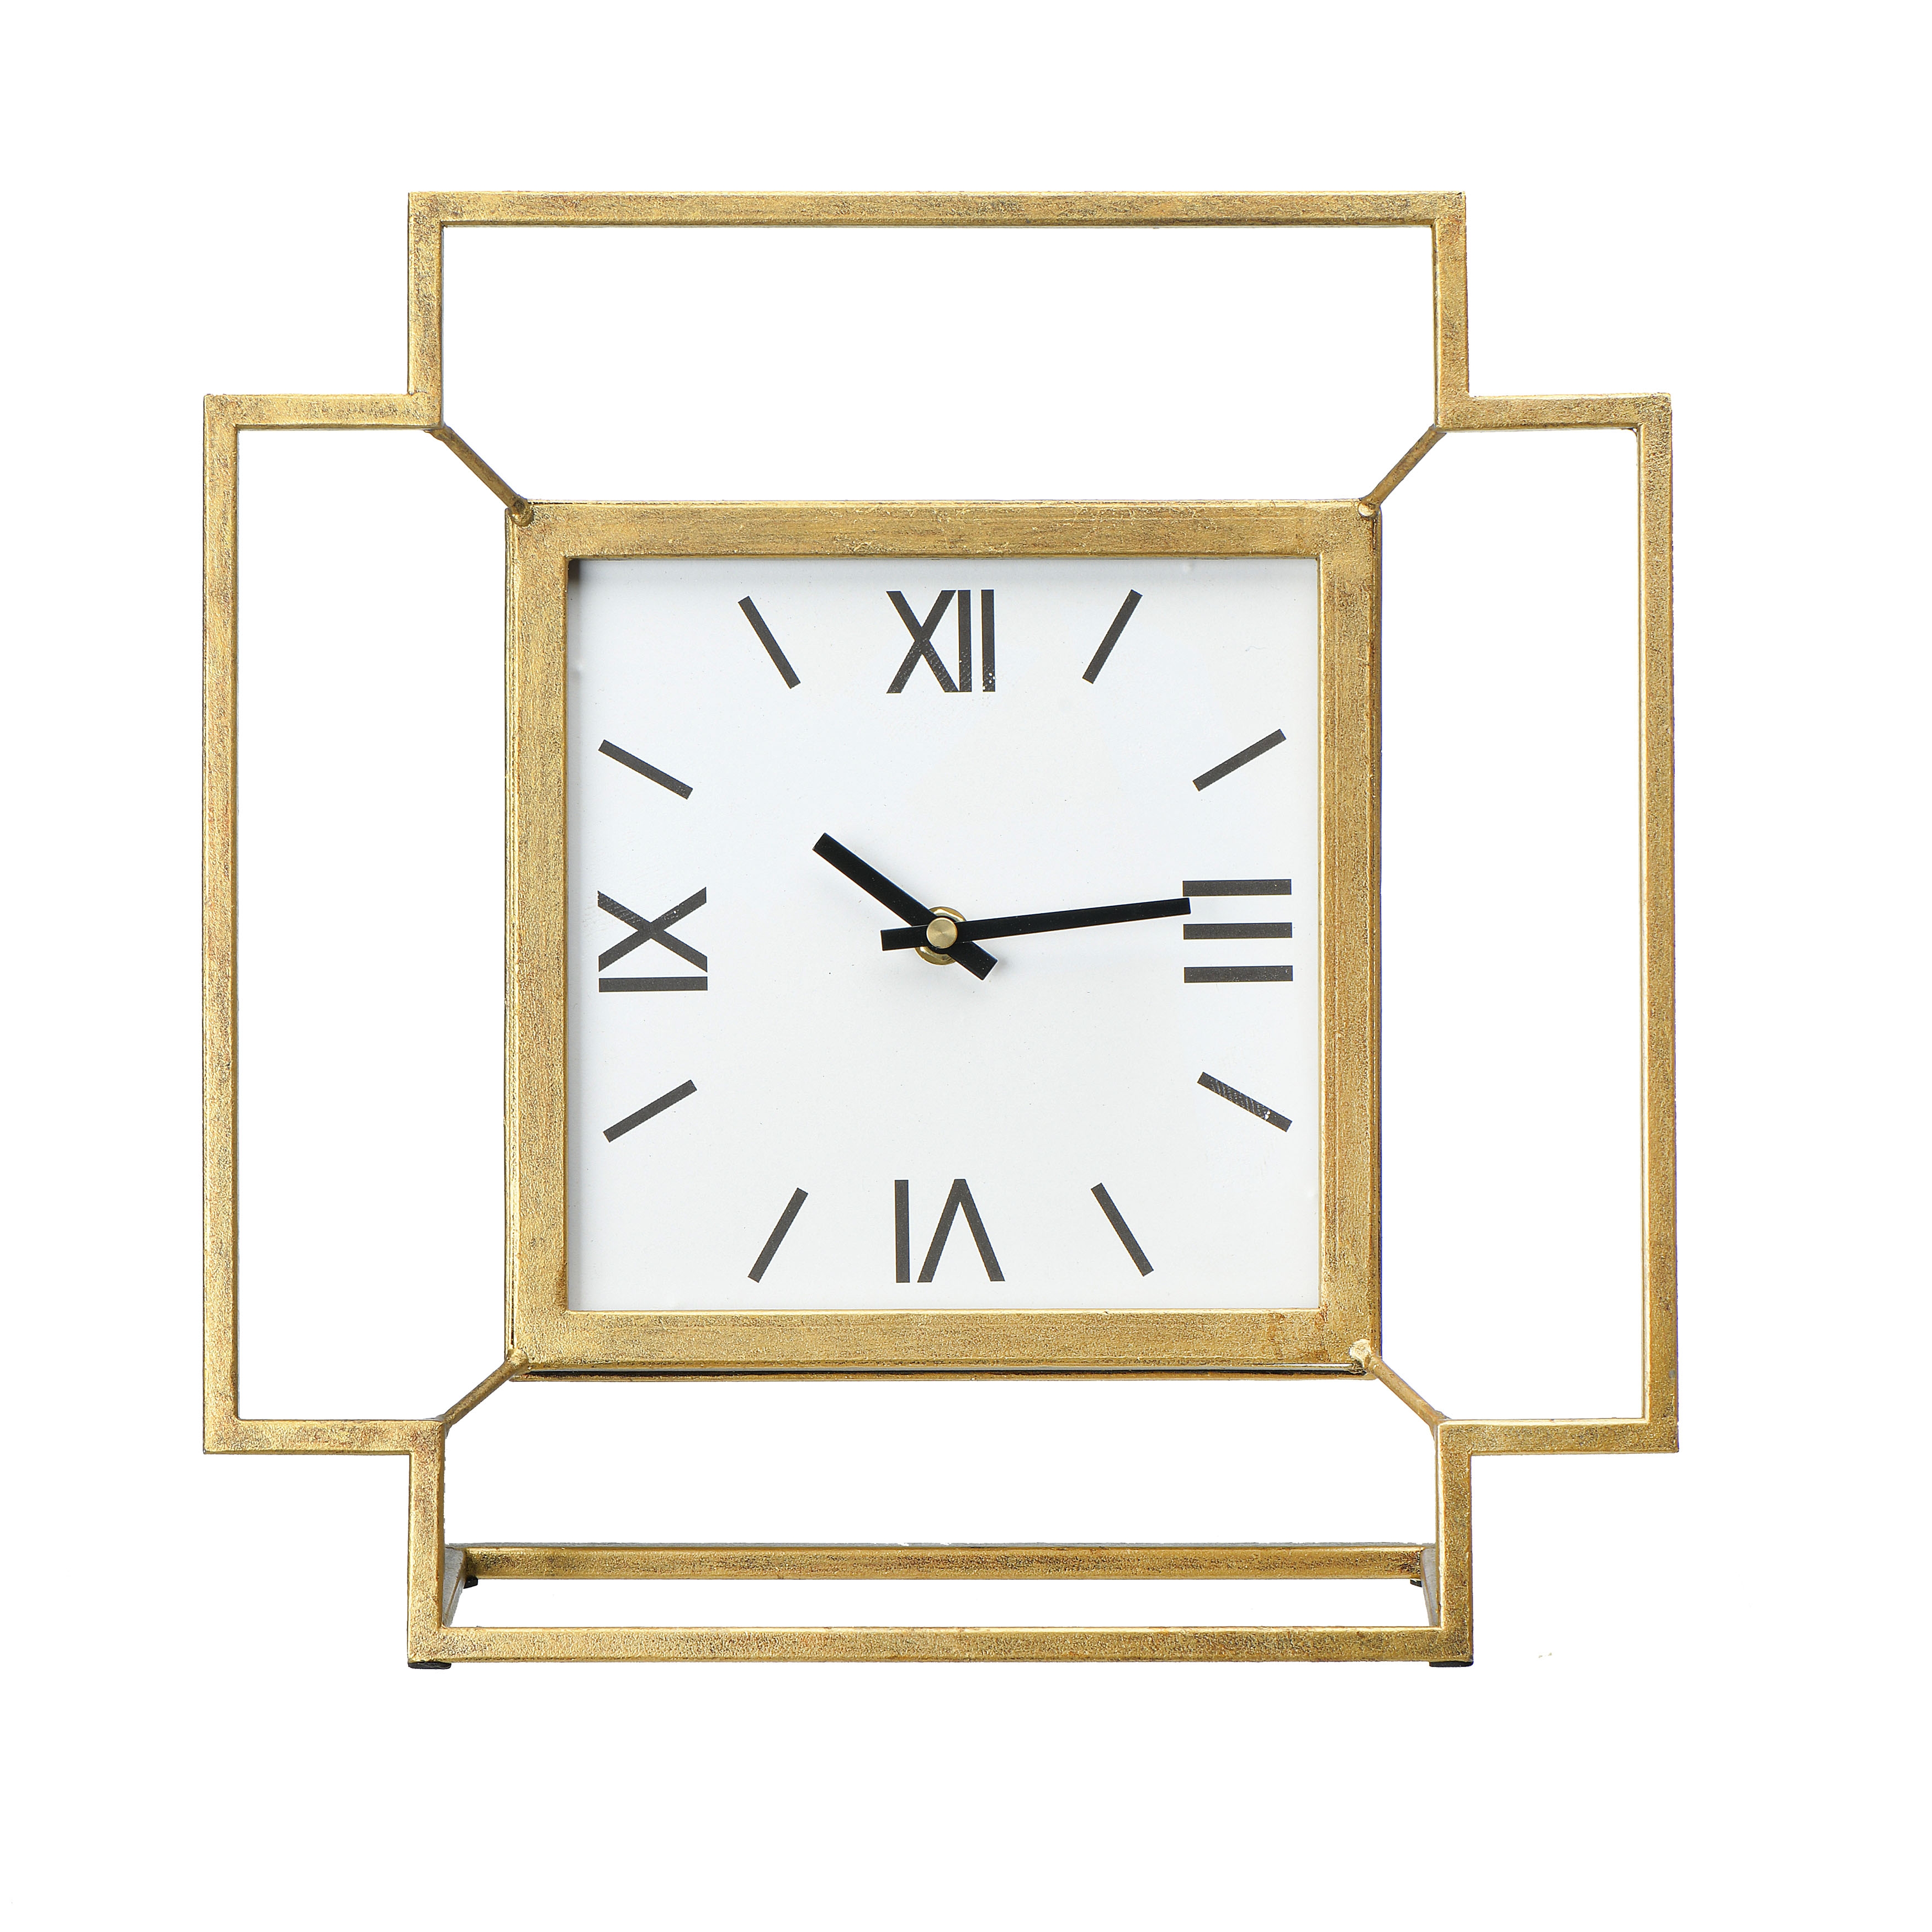 Antiqued Gold Square Mantel/Table Clock - Image 0